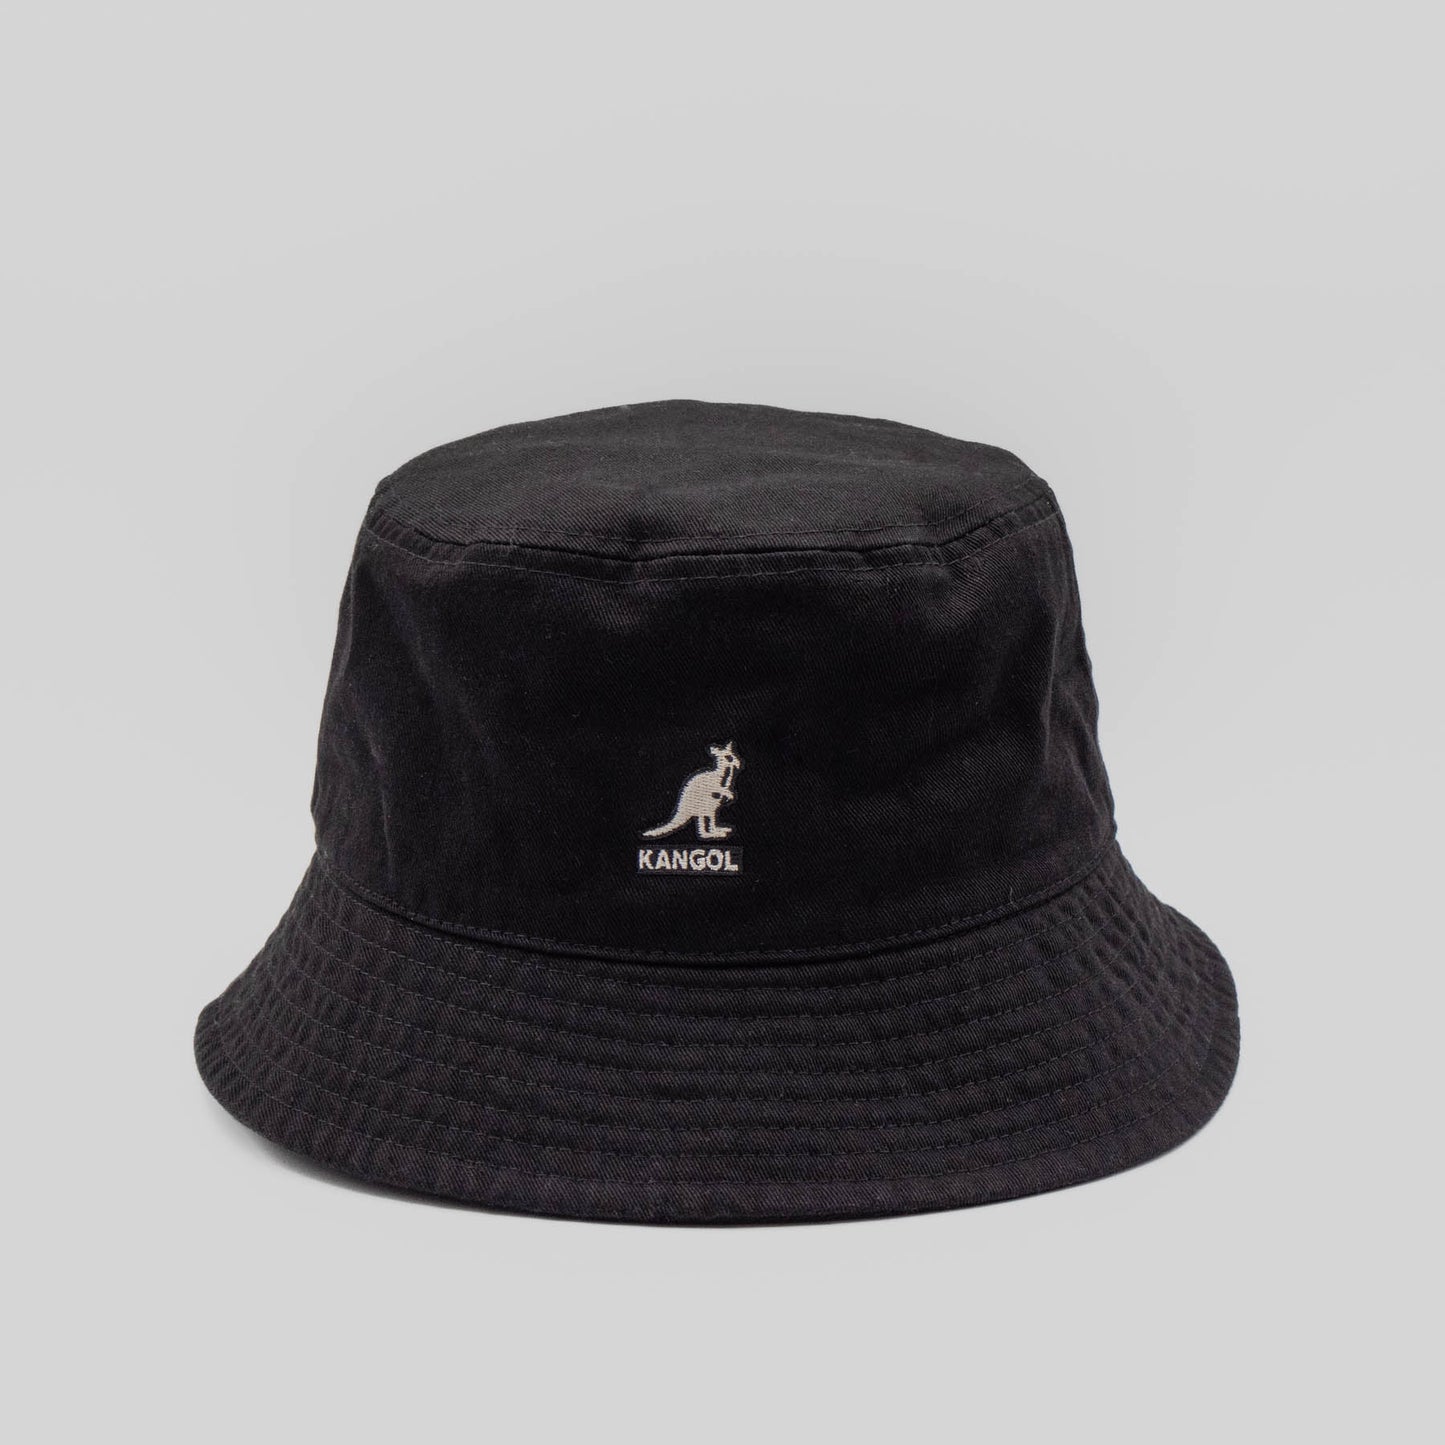 Kangol - Washed Bucket Hat - Black